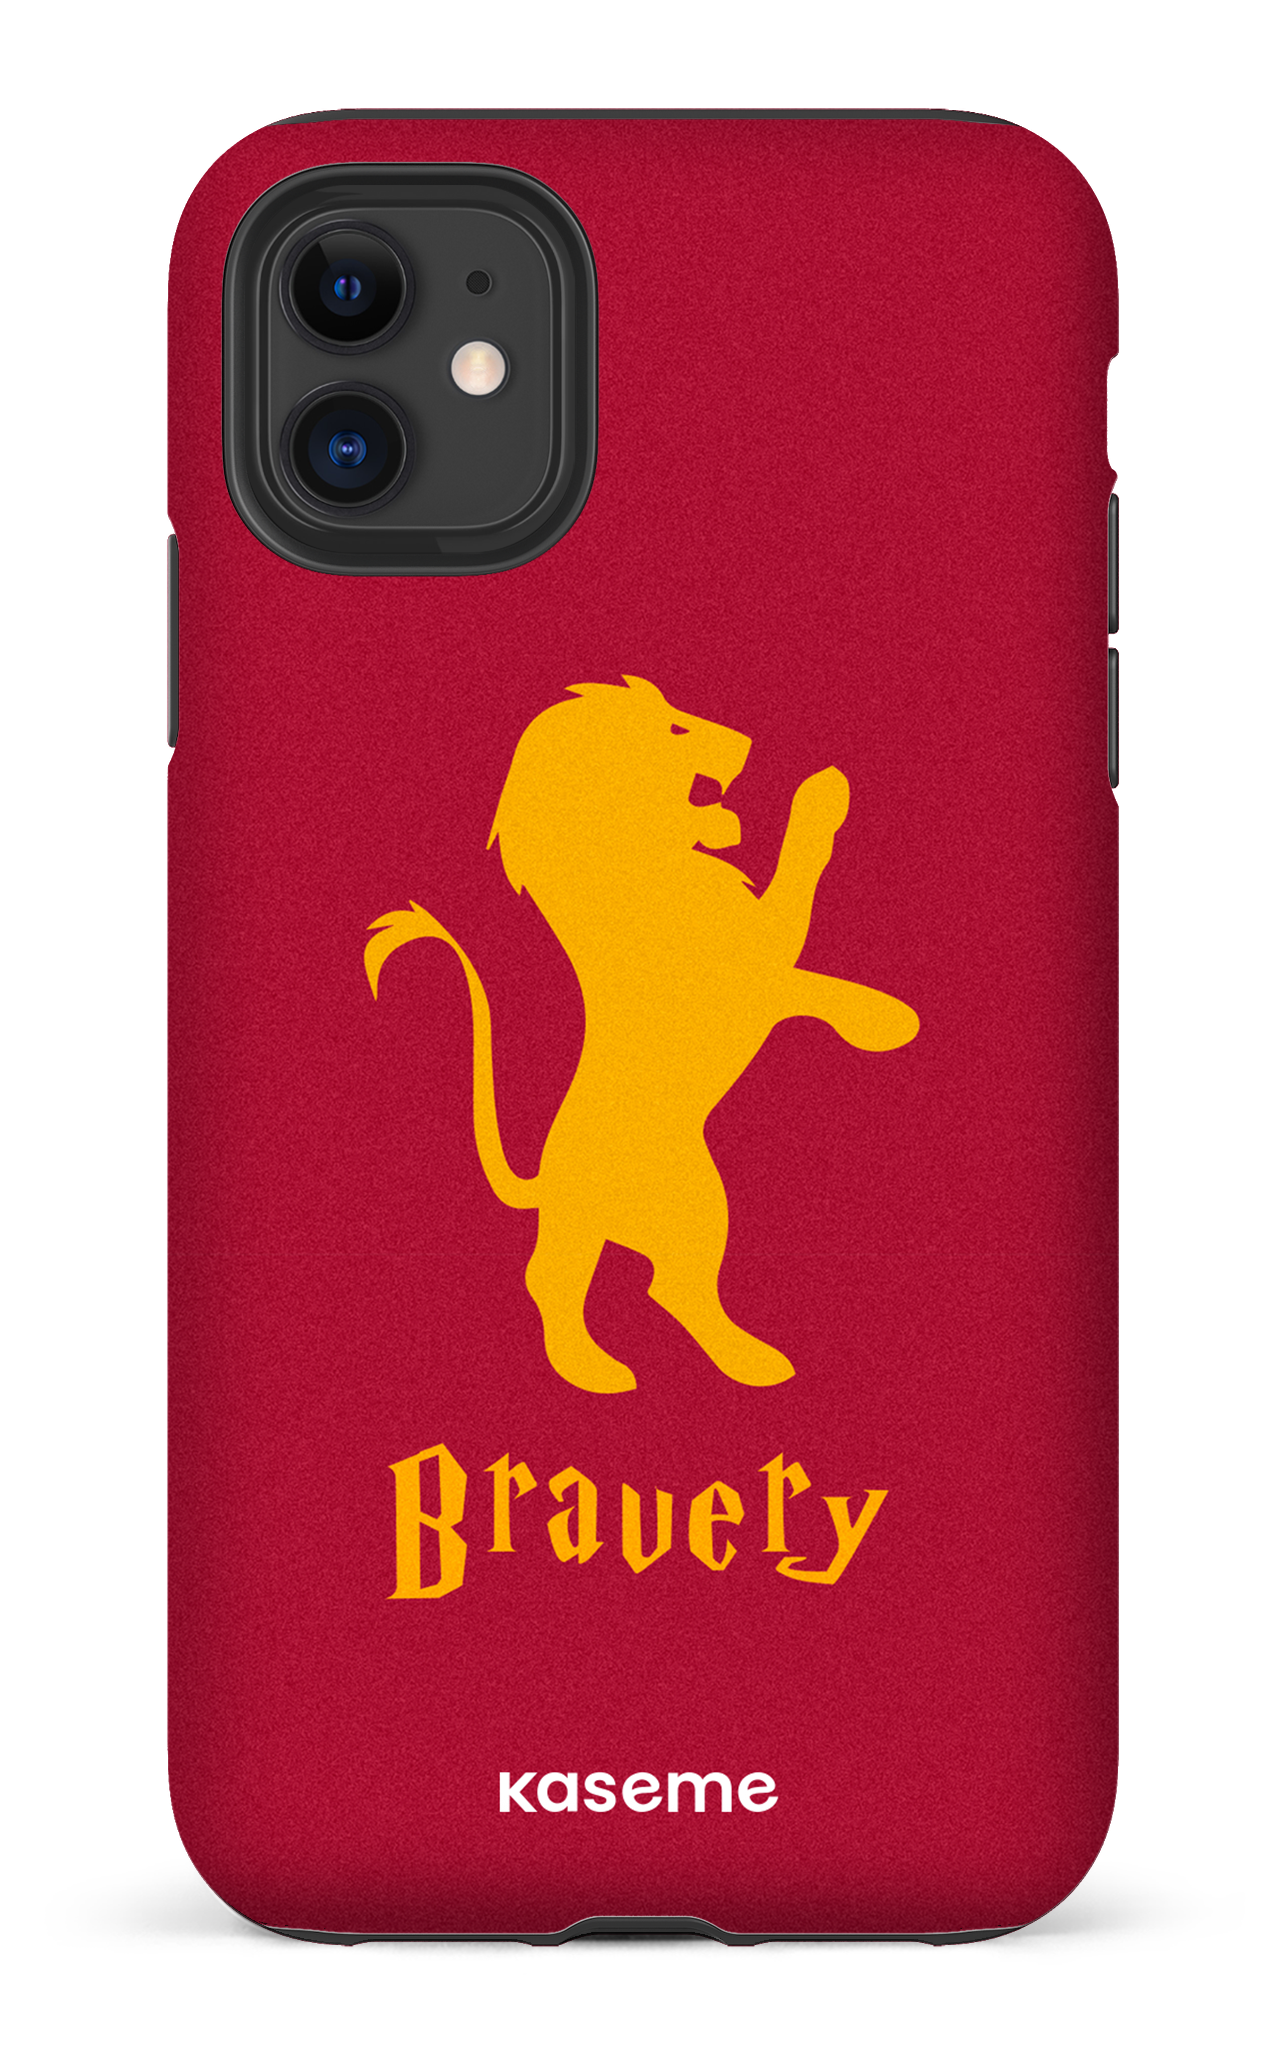 Bravery - iPhone 11